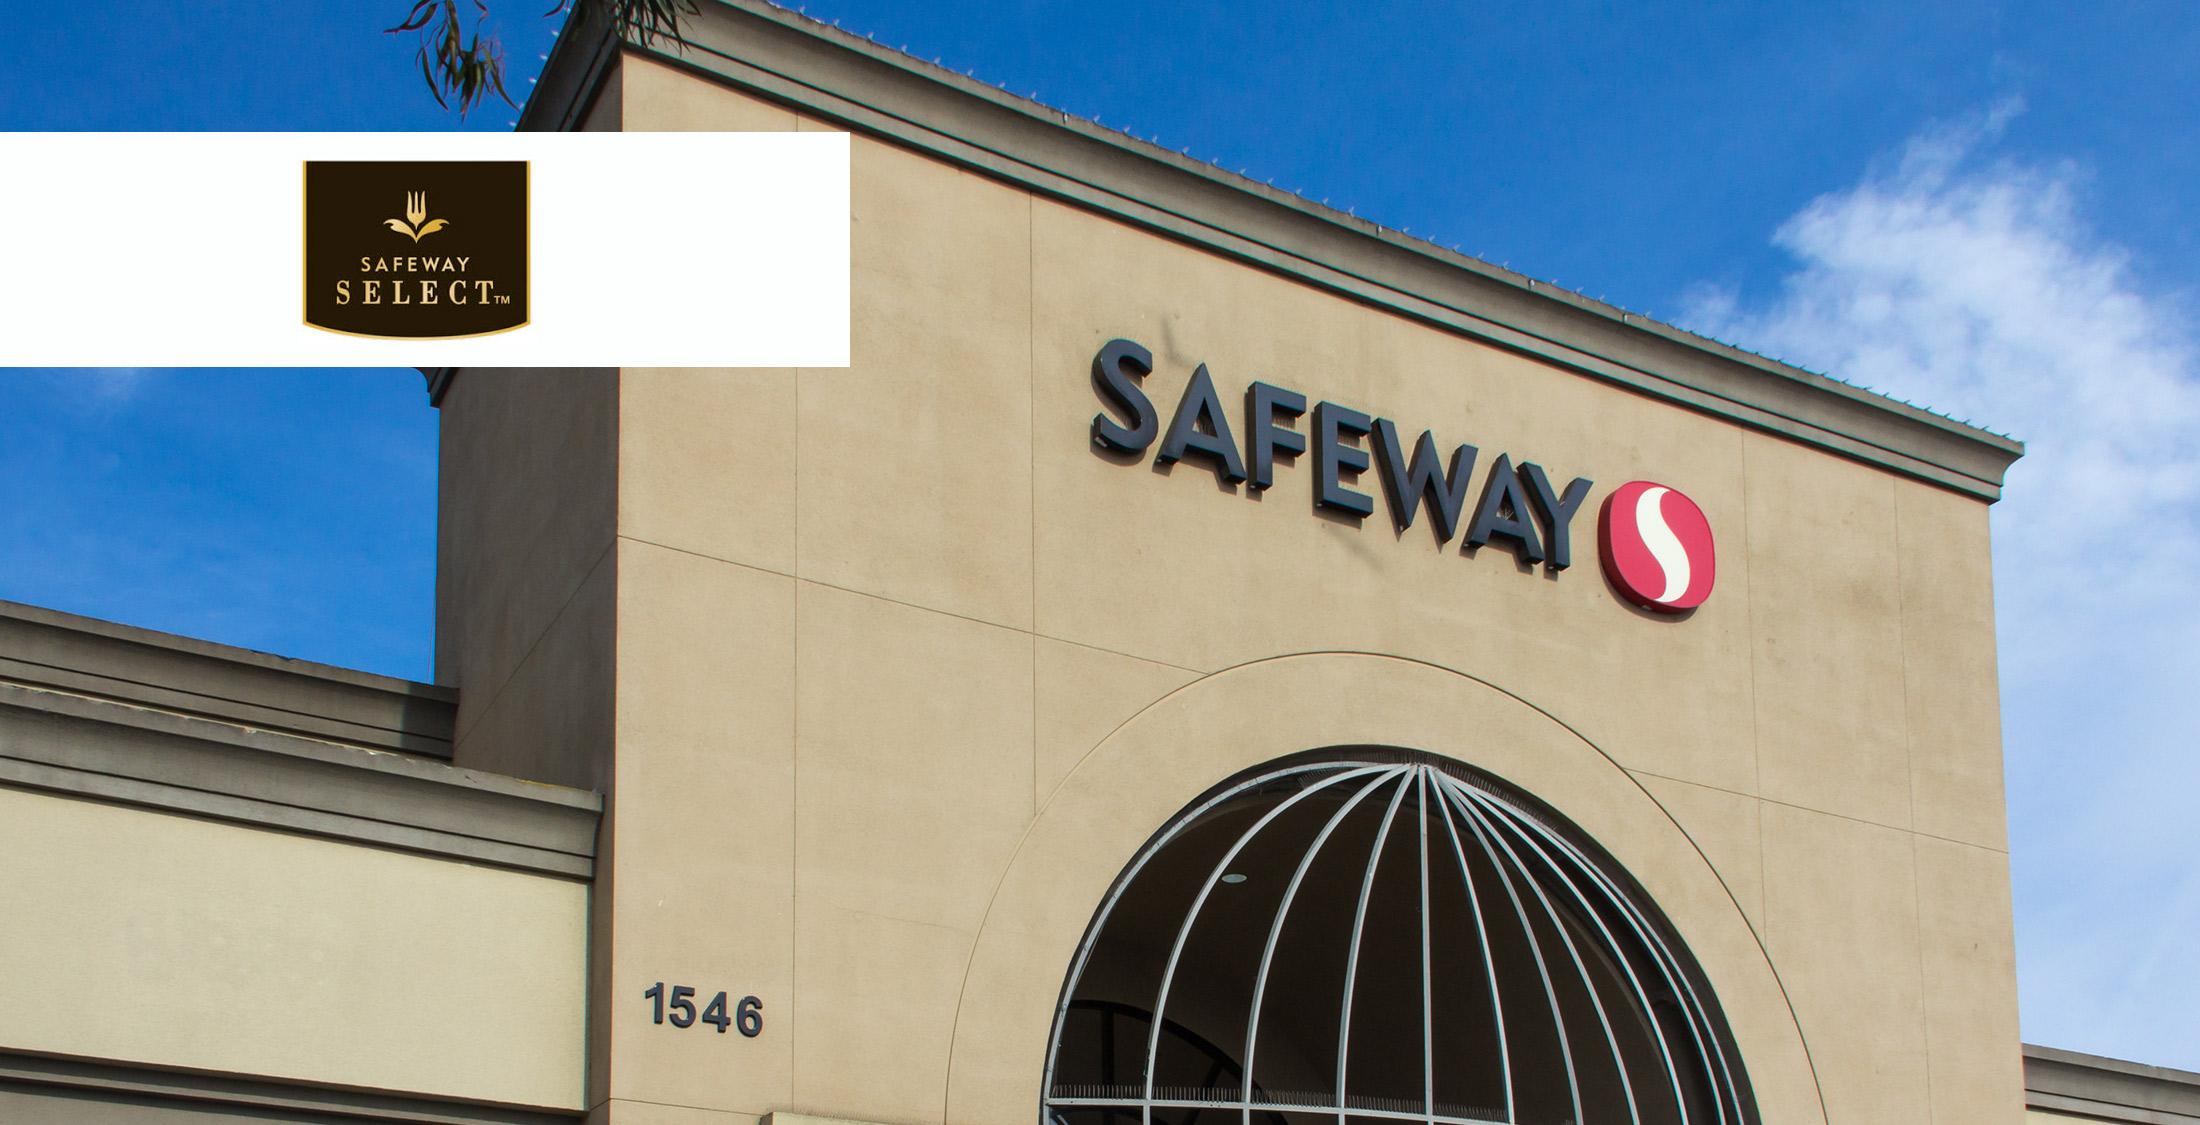 Safeway Select